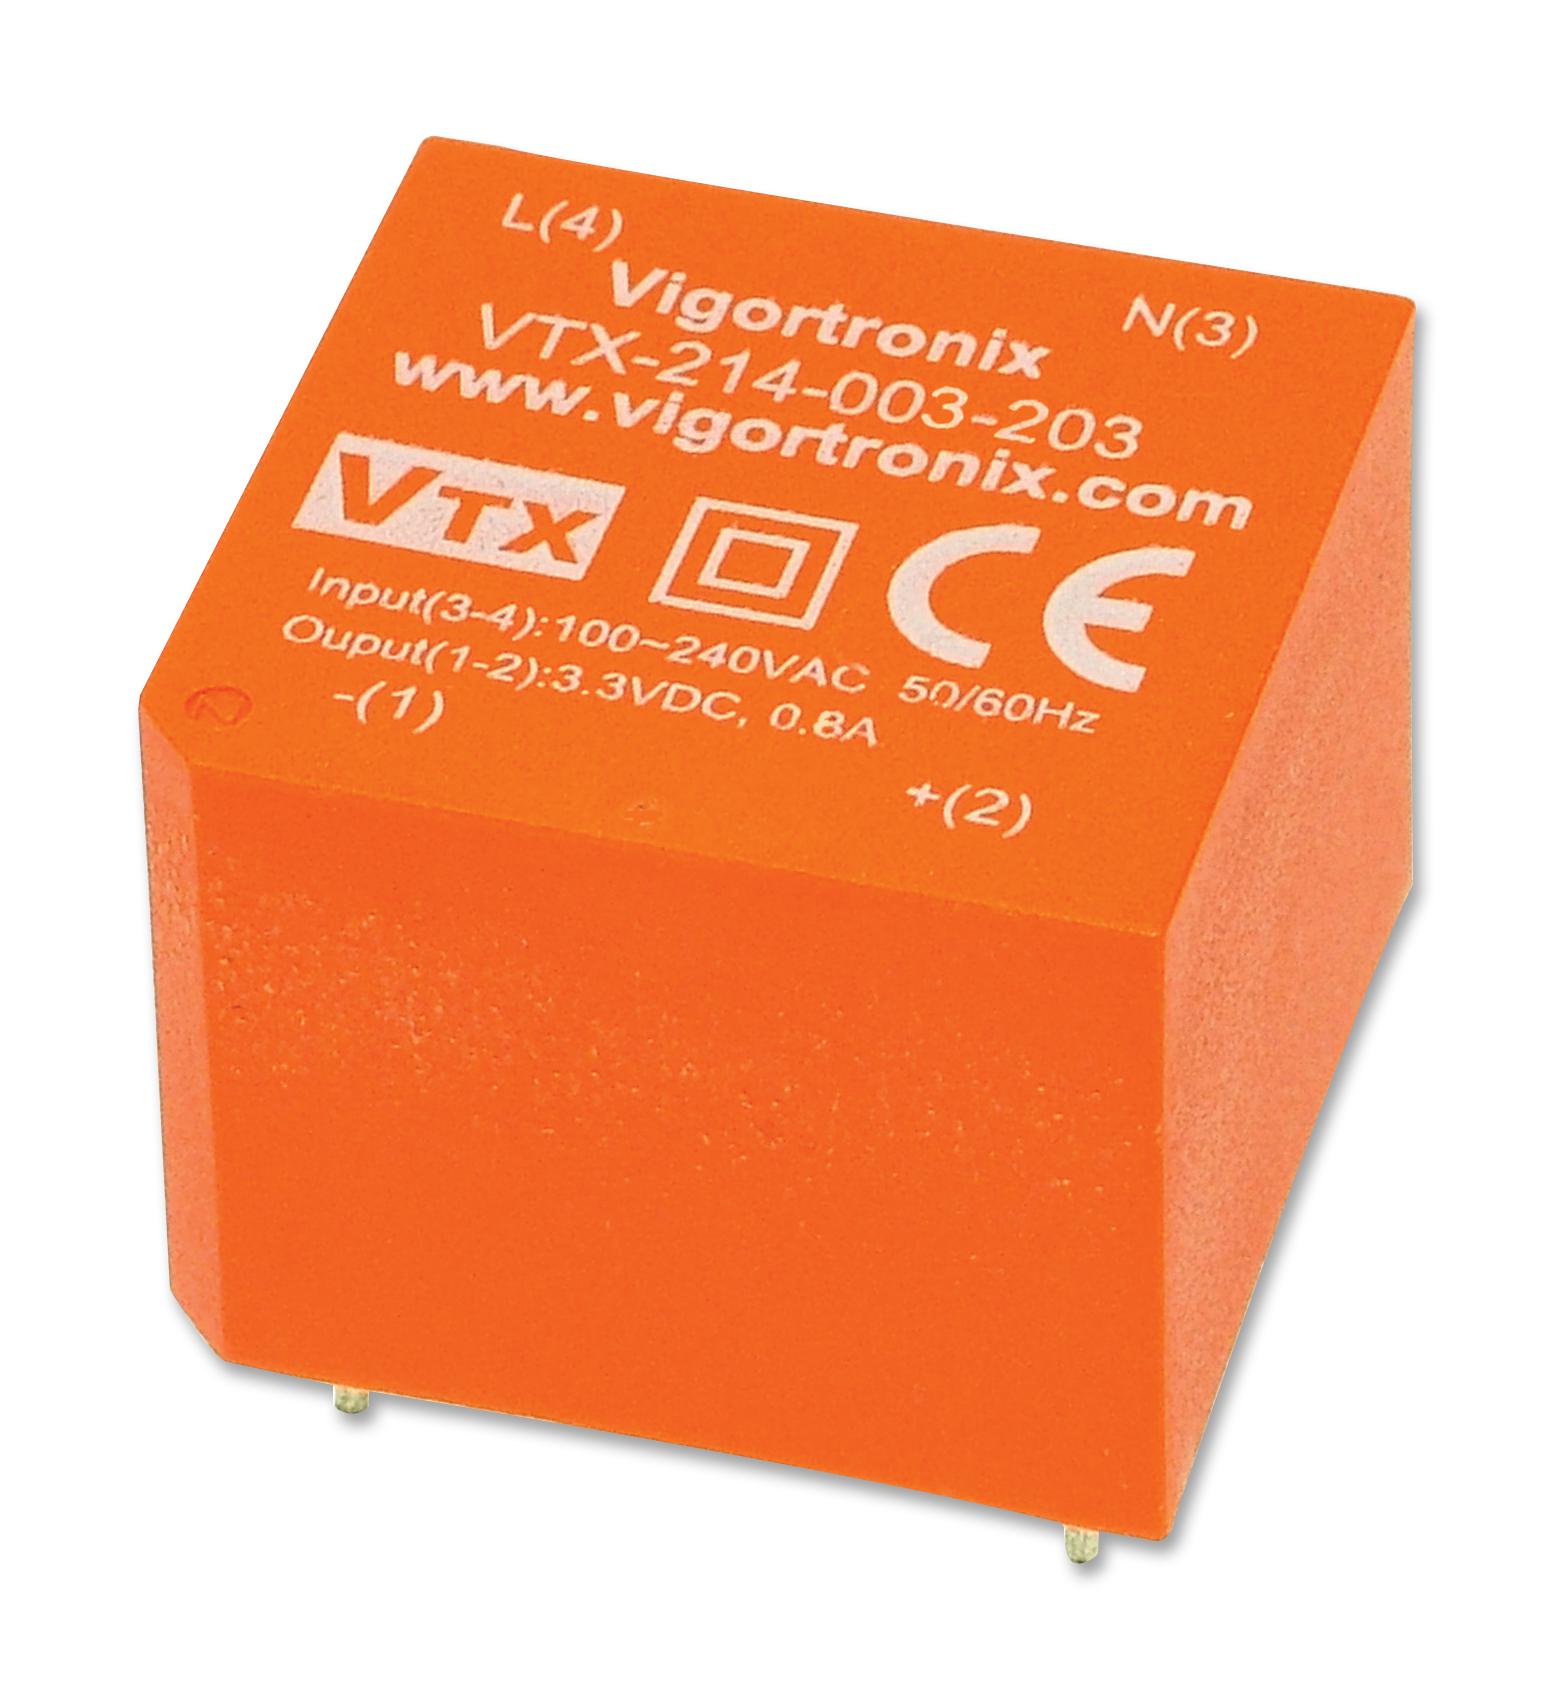 VIGORTRONIX PCB Mount - Single Ouput VTX-214-003-207 POWER SUPPLY, AC-DC, 7.5V, 0.4A VIGORTRONIX 2464658 VTX-214-003-207